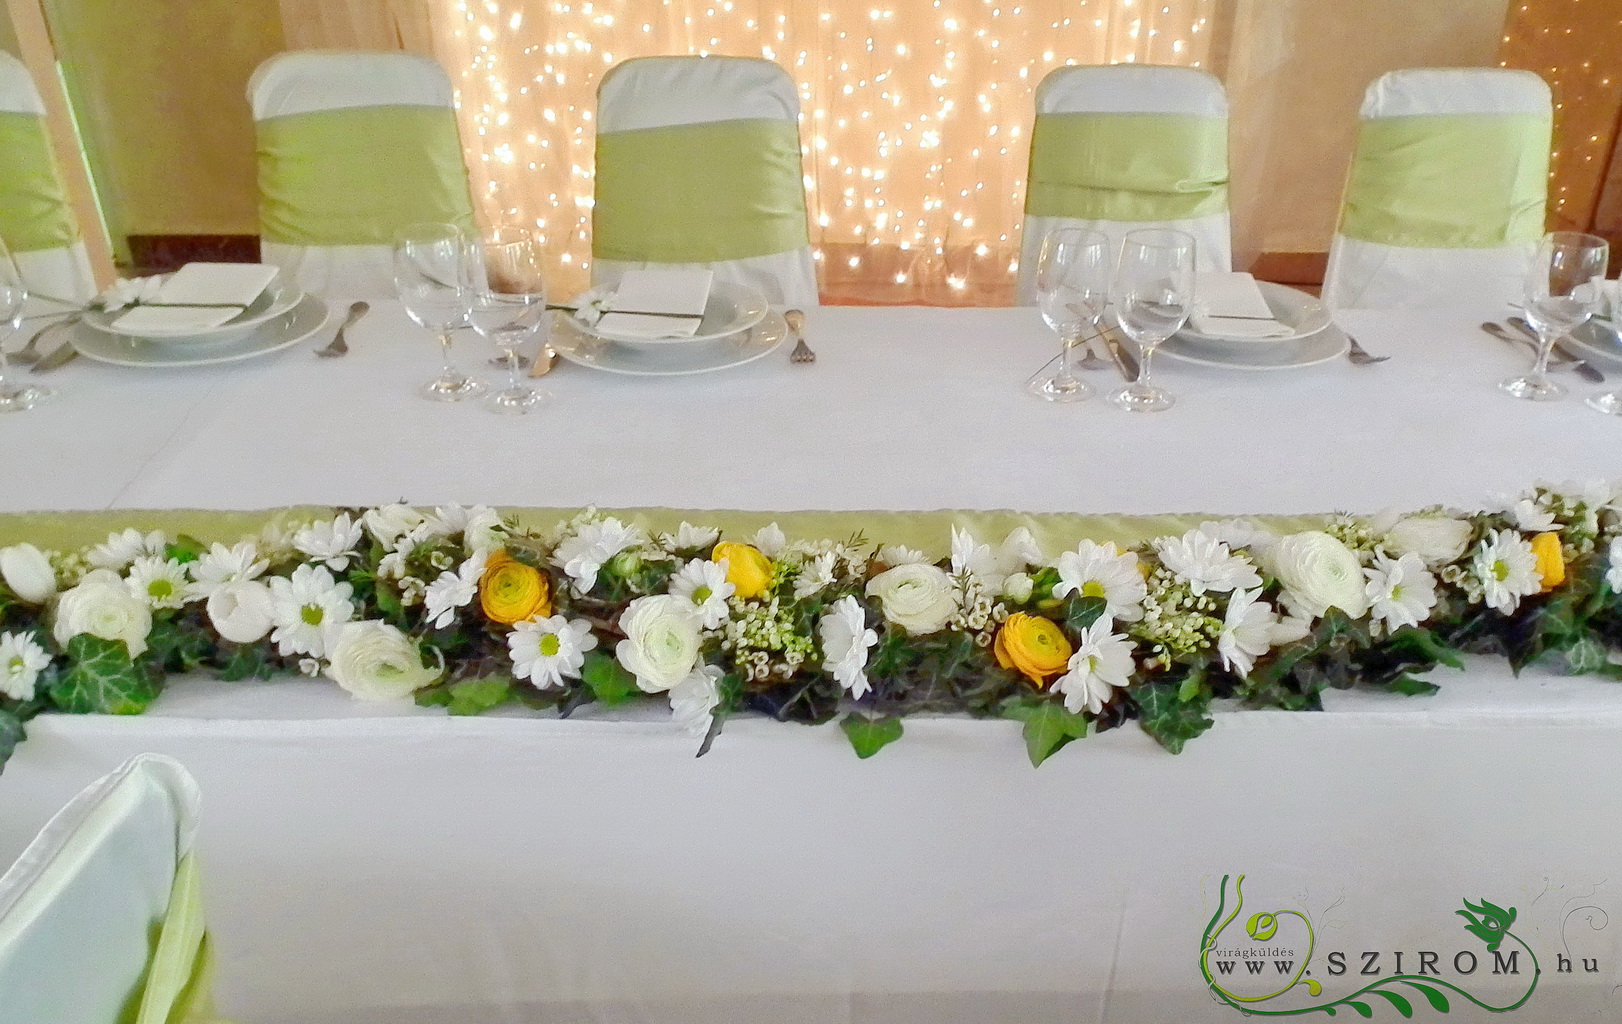 flower delivery Budapest - Main table centerpiece (buttercups, daisies, wax, white, yellow), Dudok rendezvényház, wedding